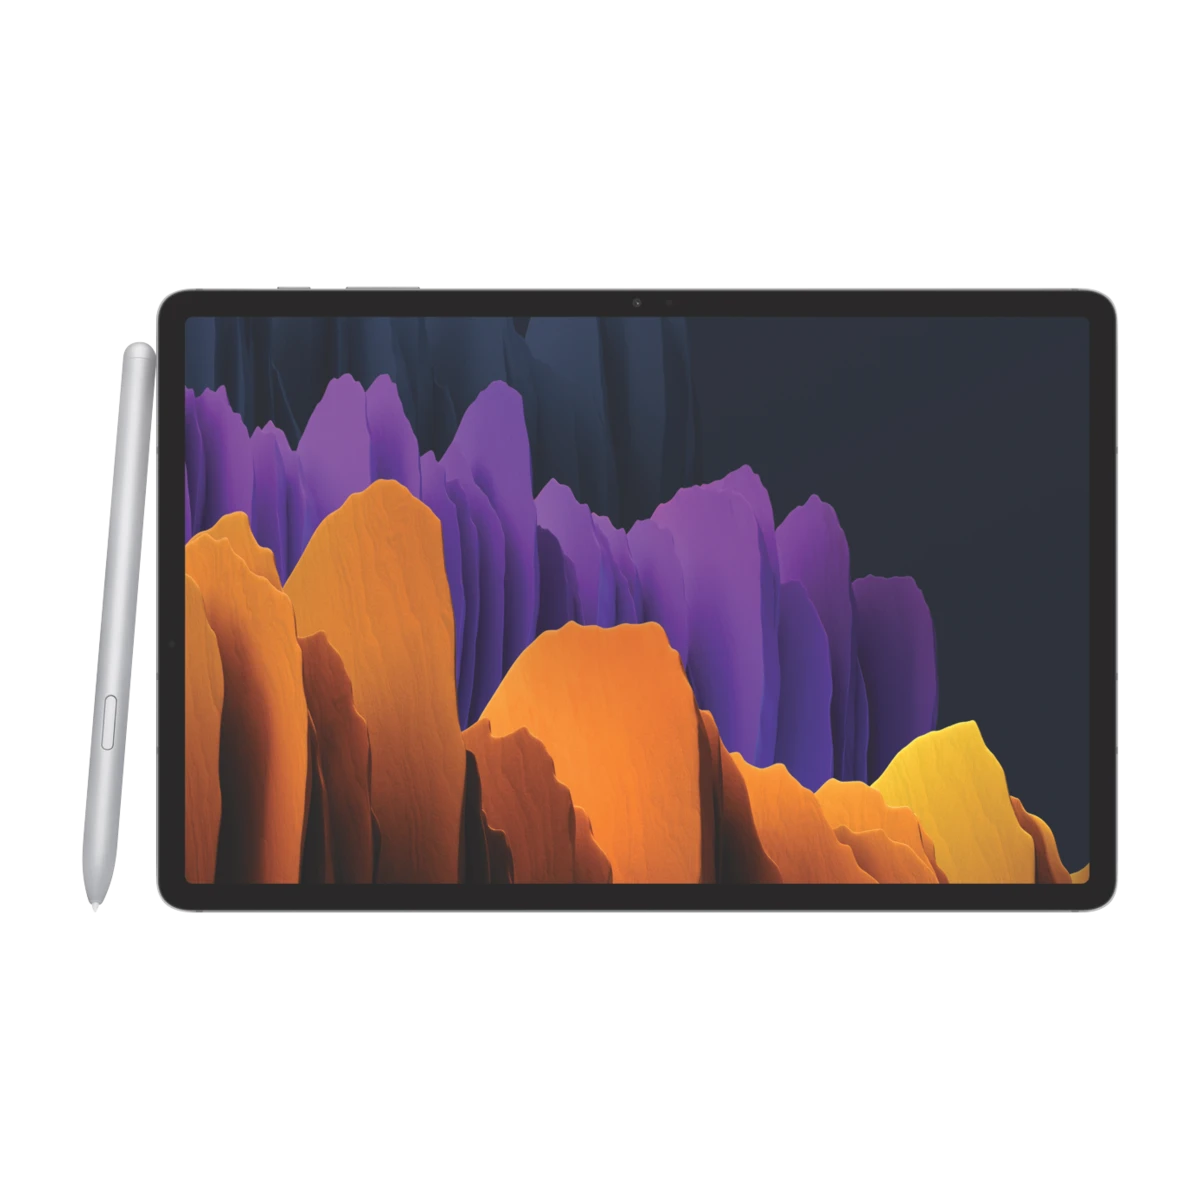 Samsung Galaxy Tab S7 Plus Repairs